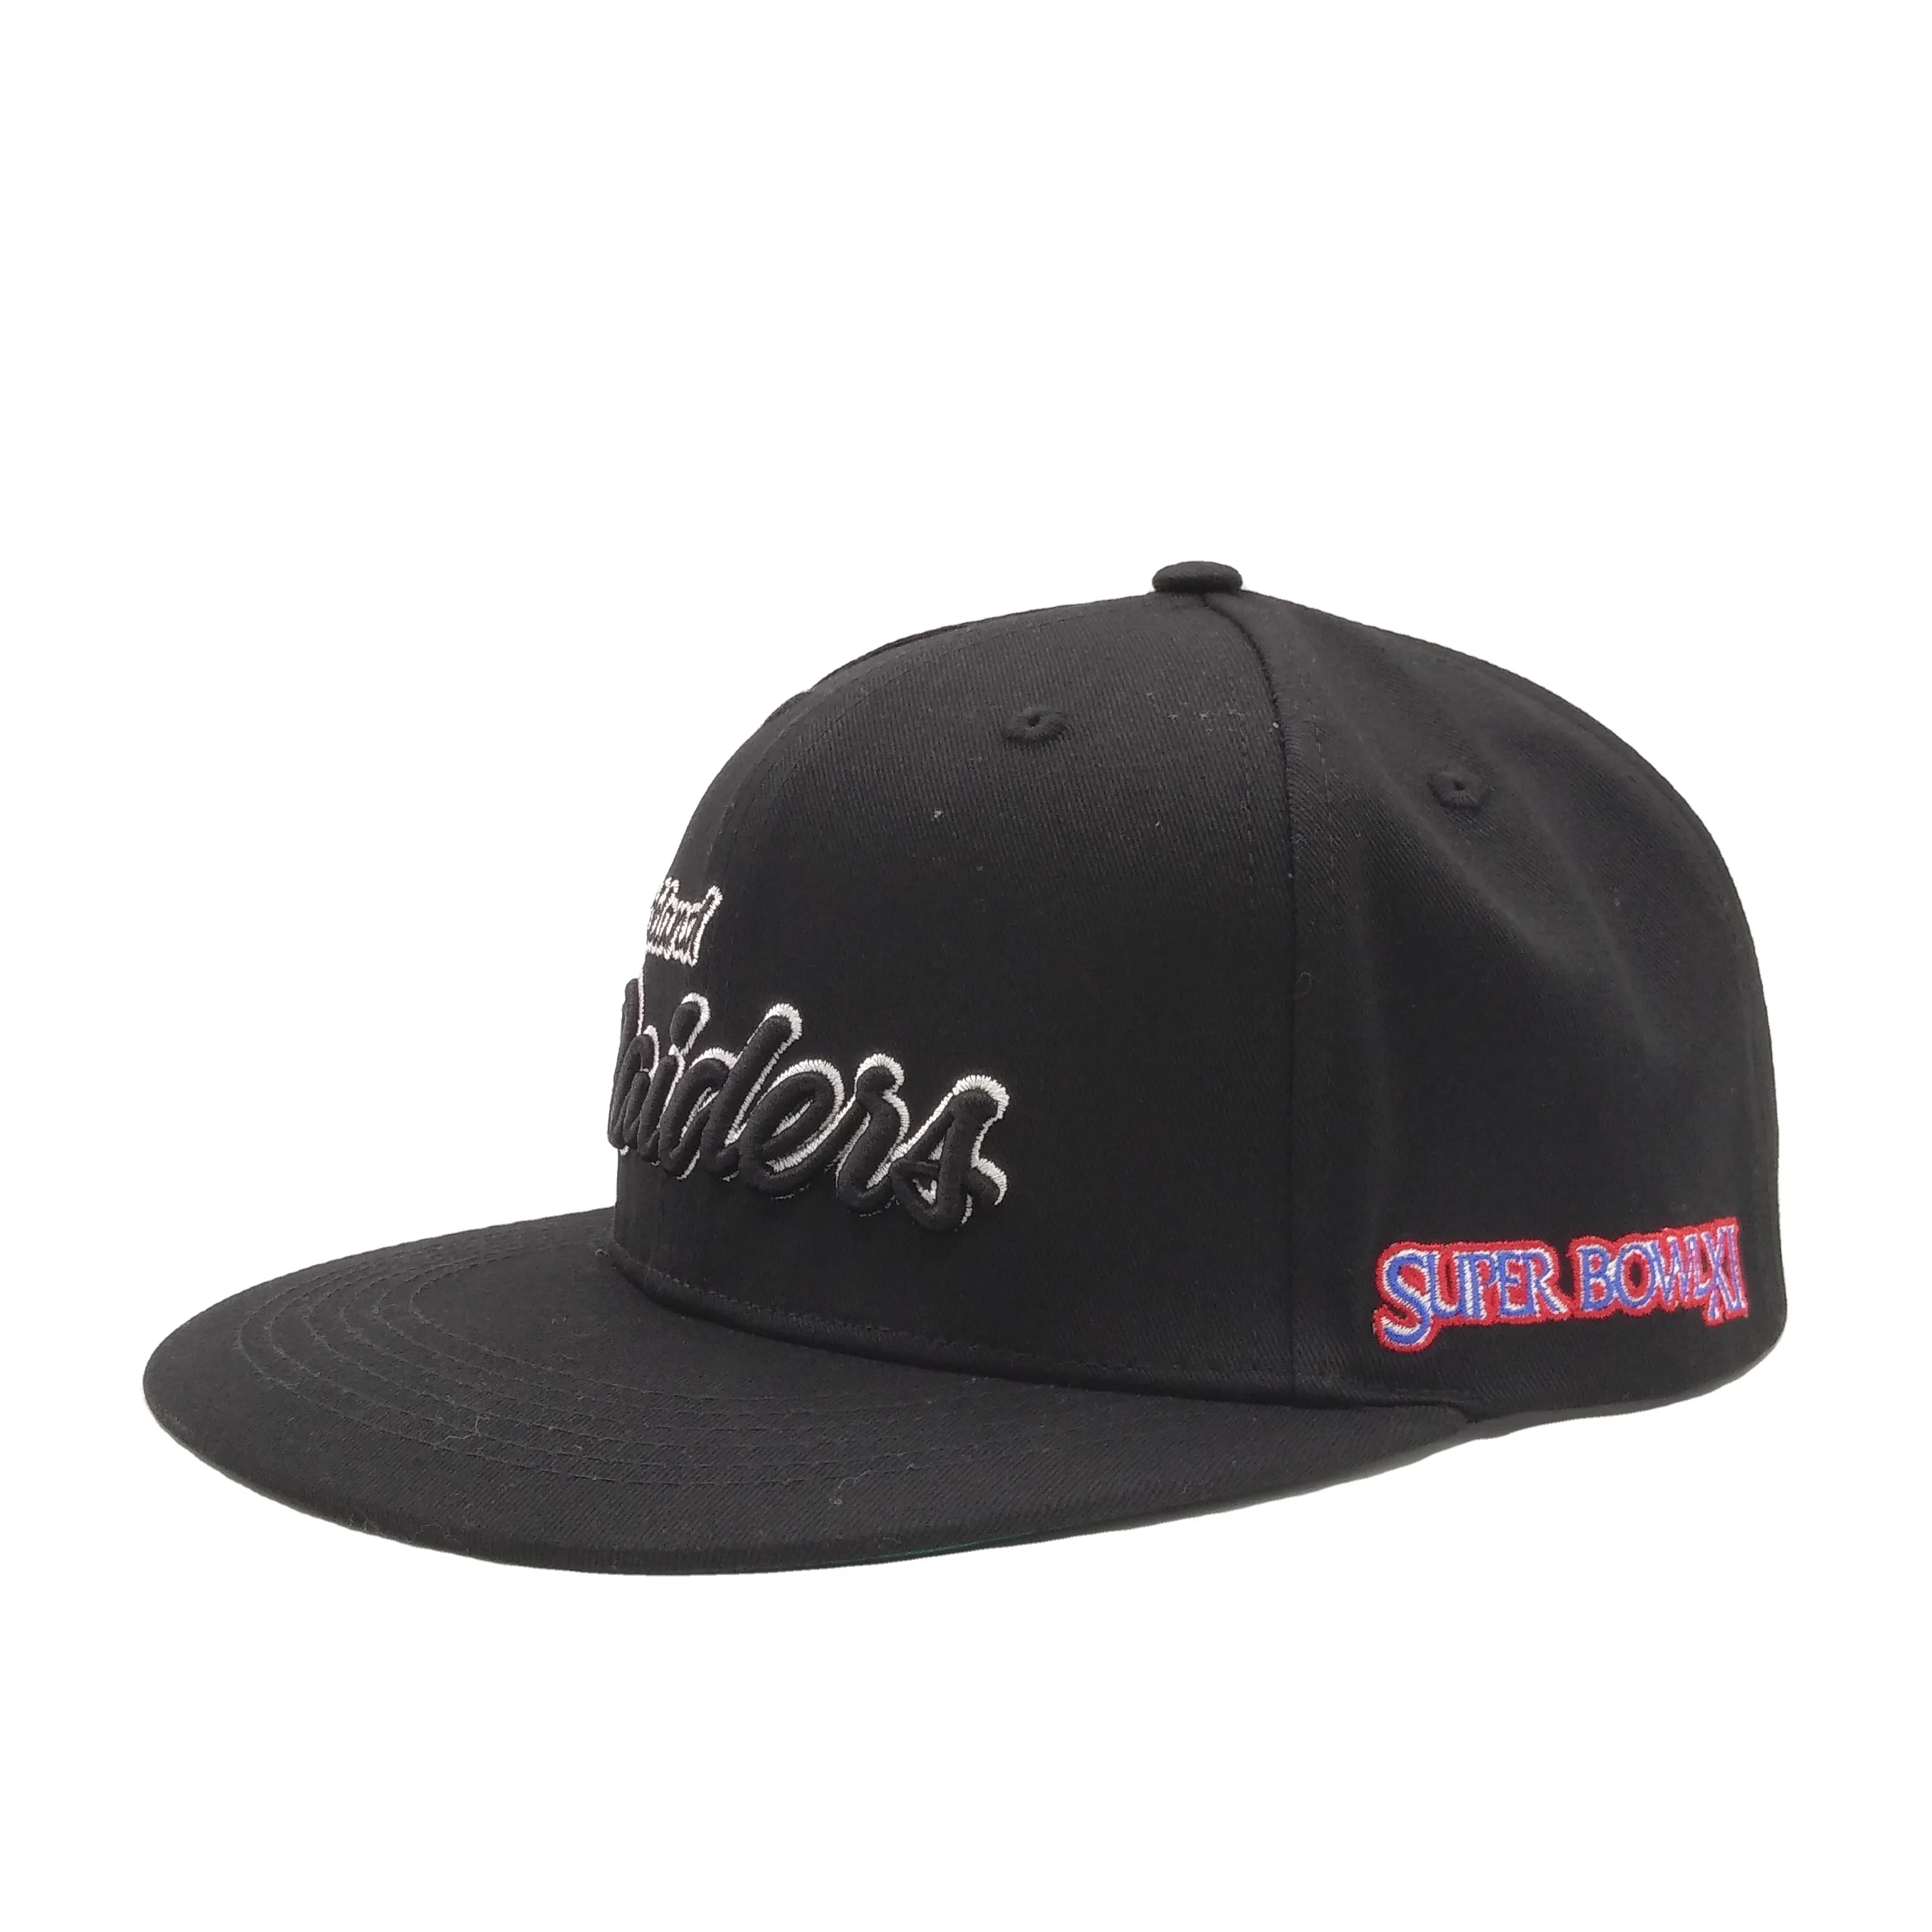 custom cotton cap green brim  snapback black hat personalized cap hip hop  Letter raised logo 3D snapback hat